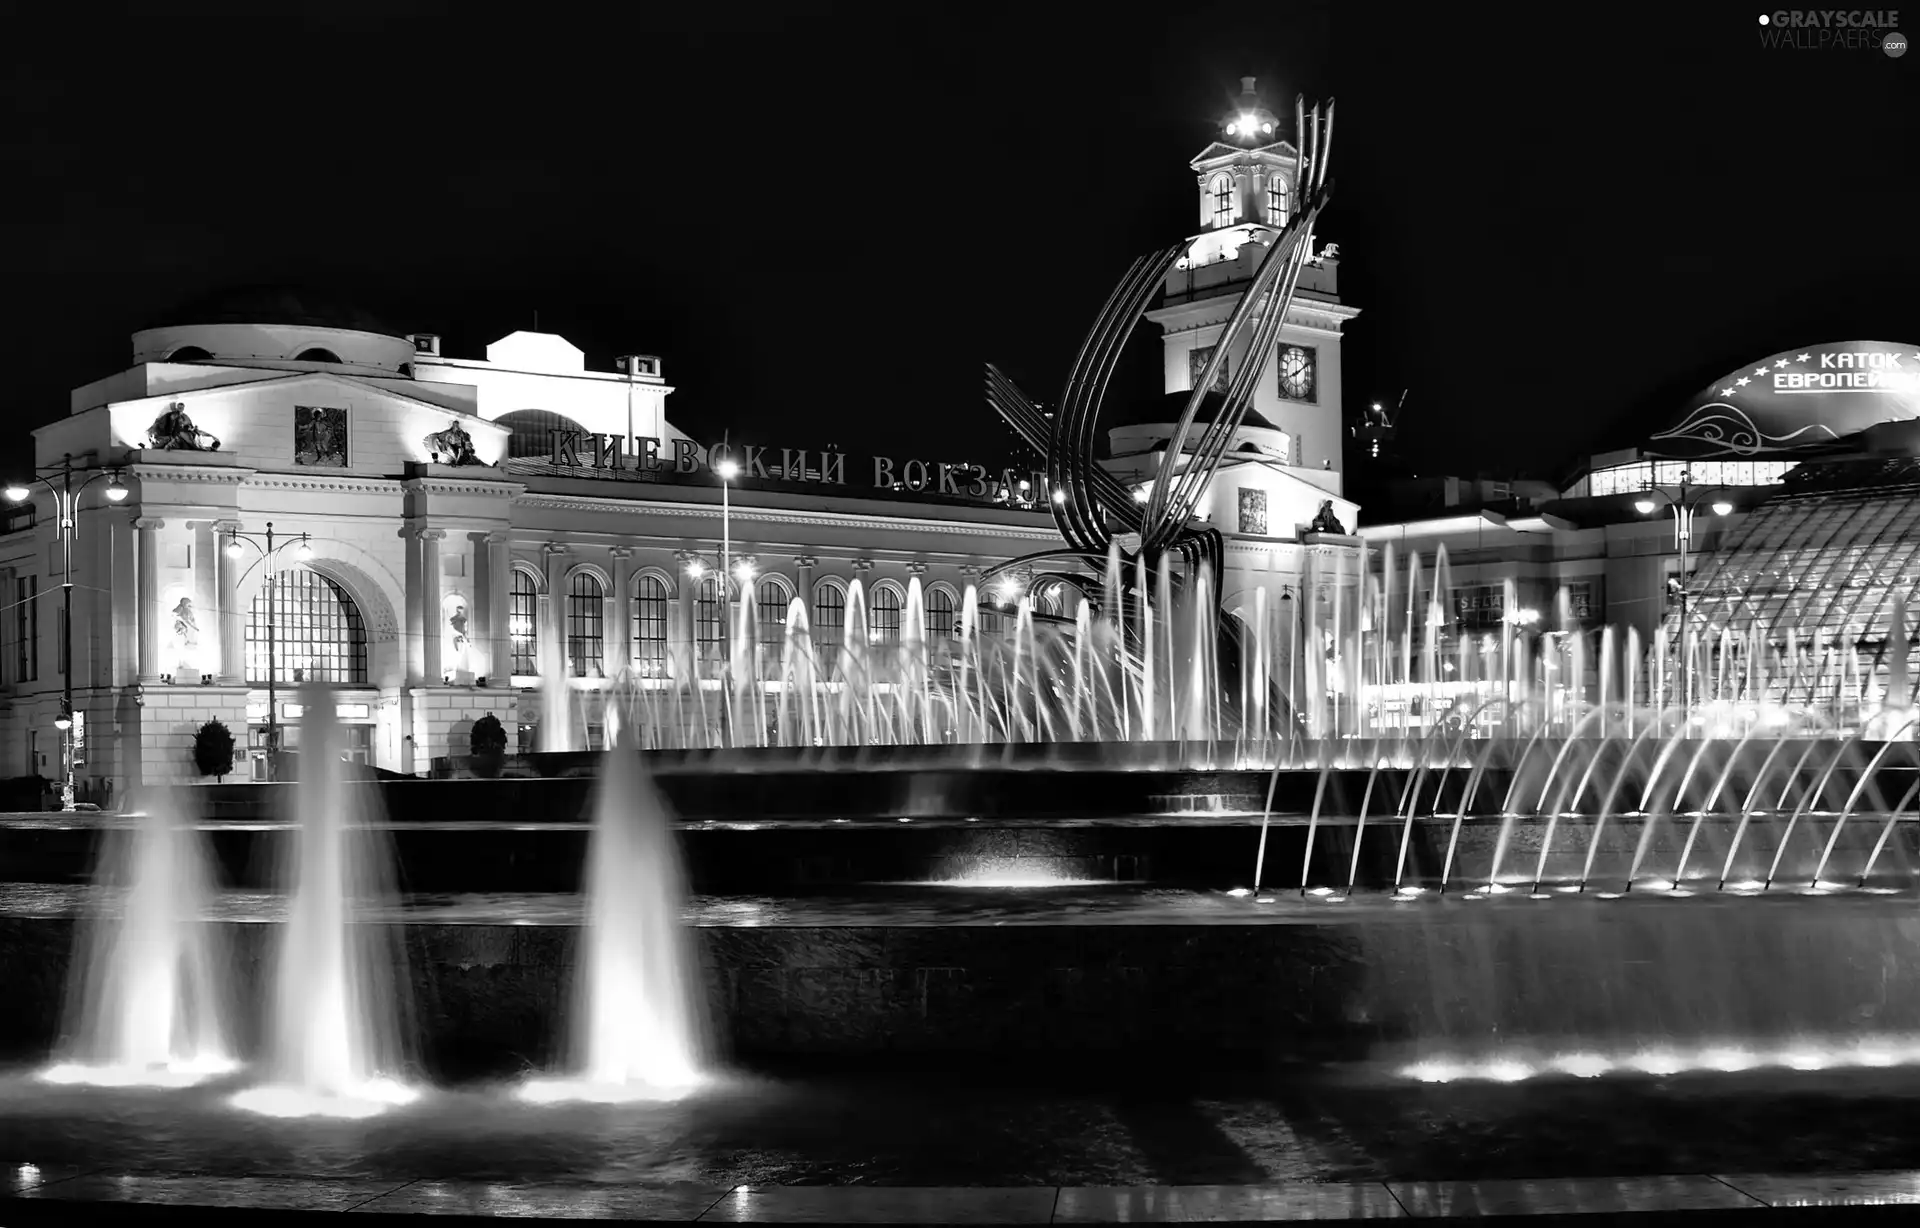 fountain, Rape of Europa, Moscow